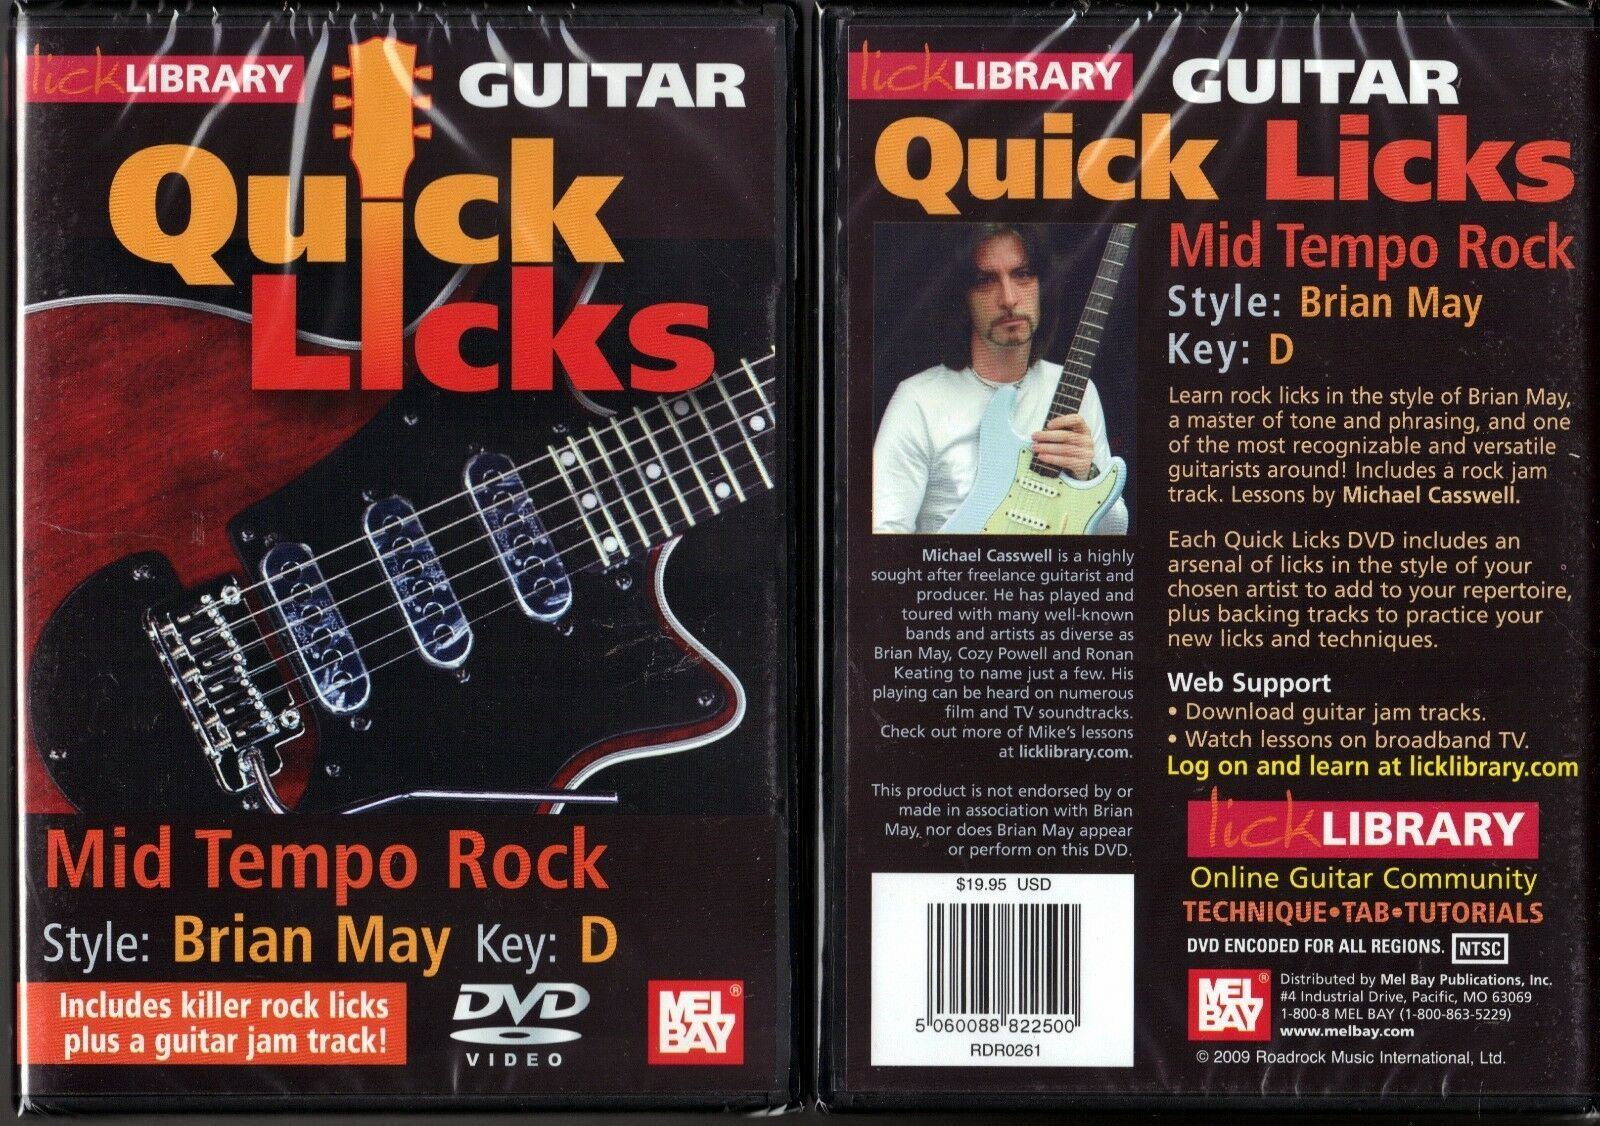 Santana instructional dvd lick library